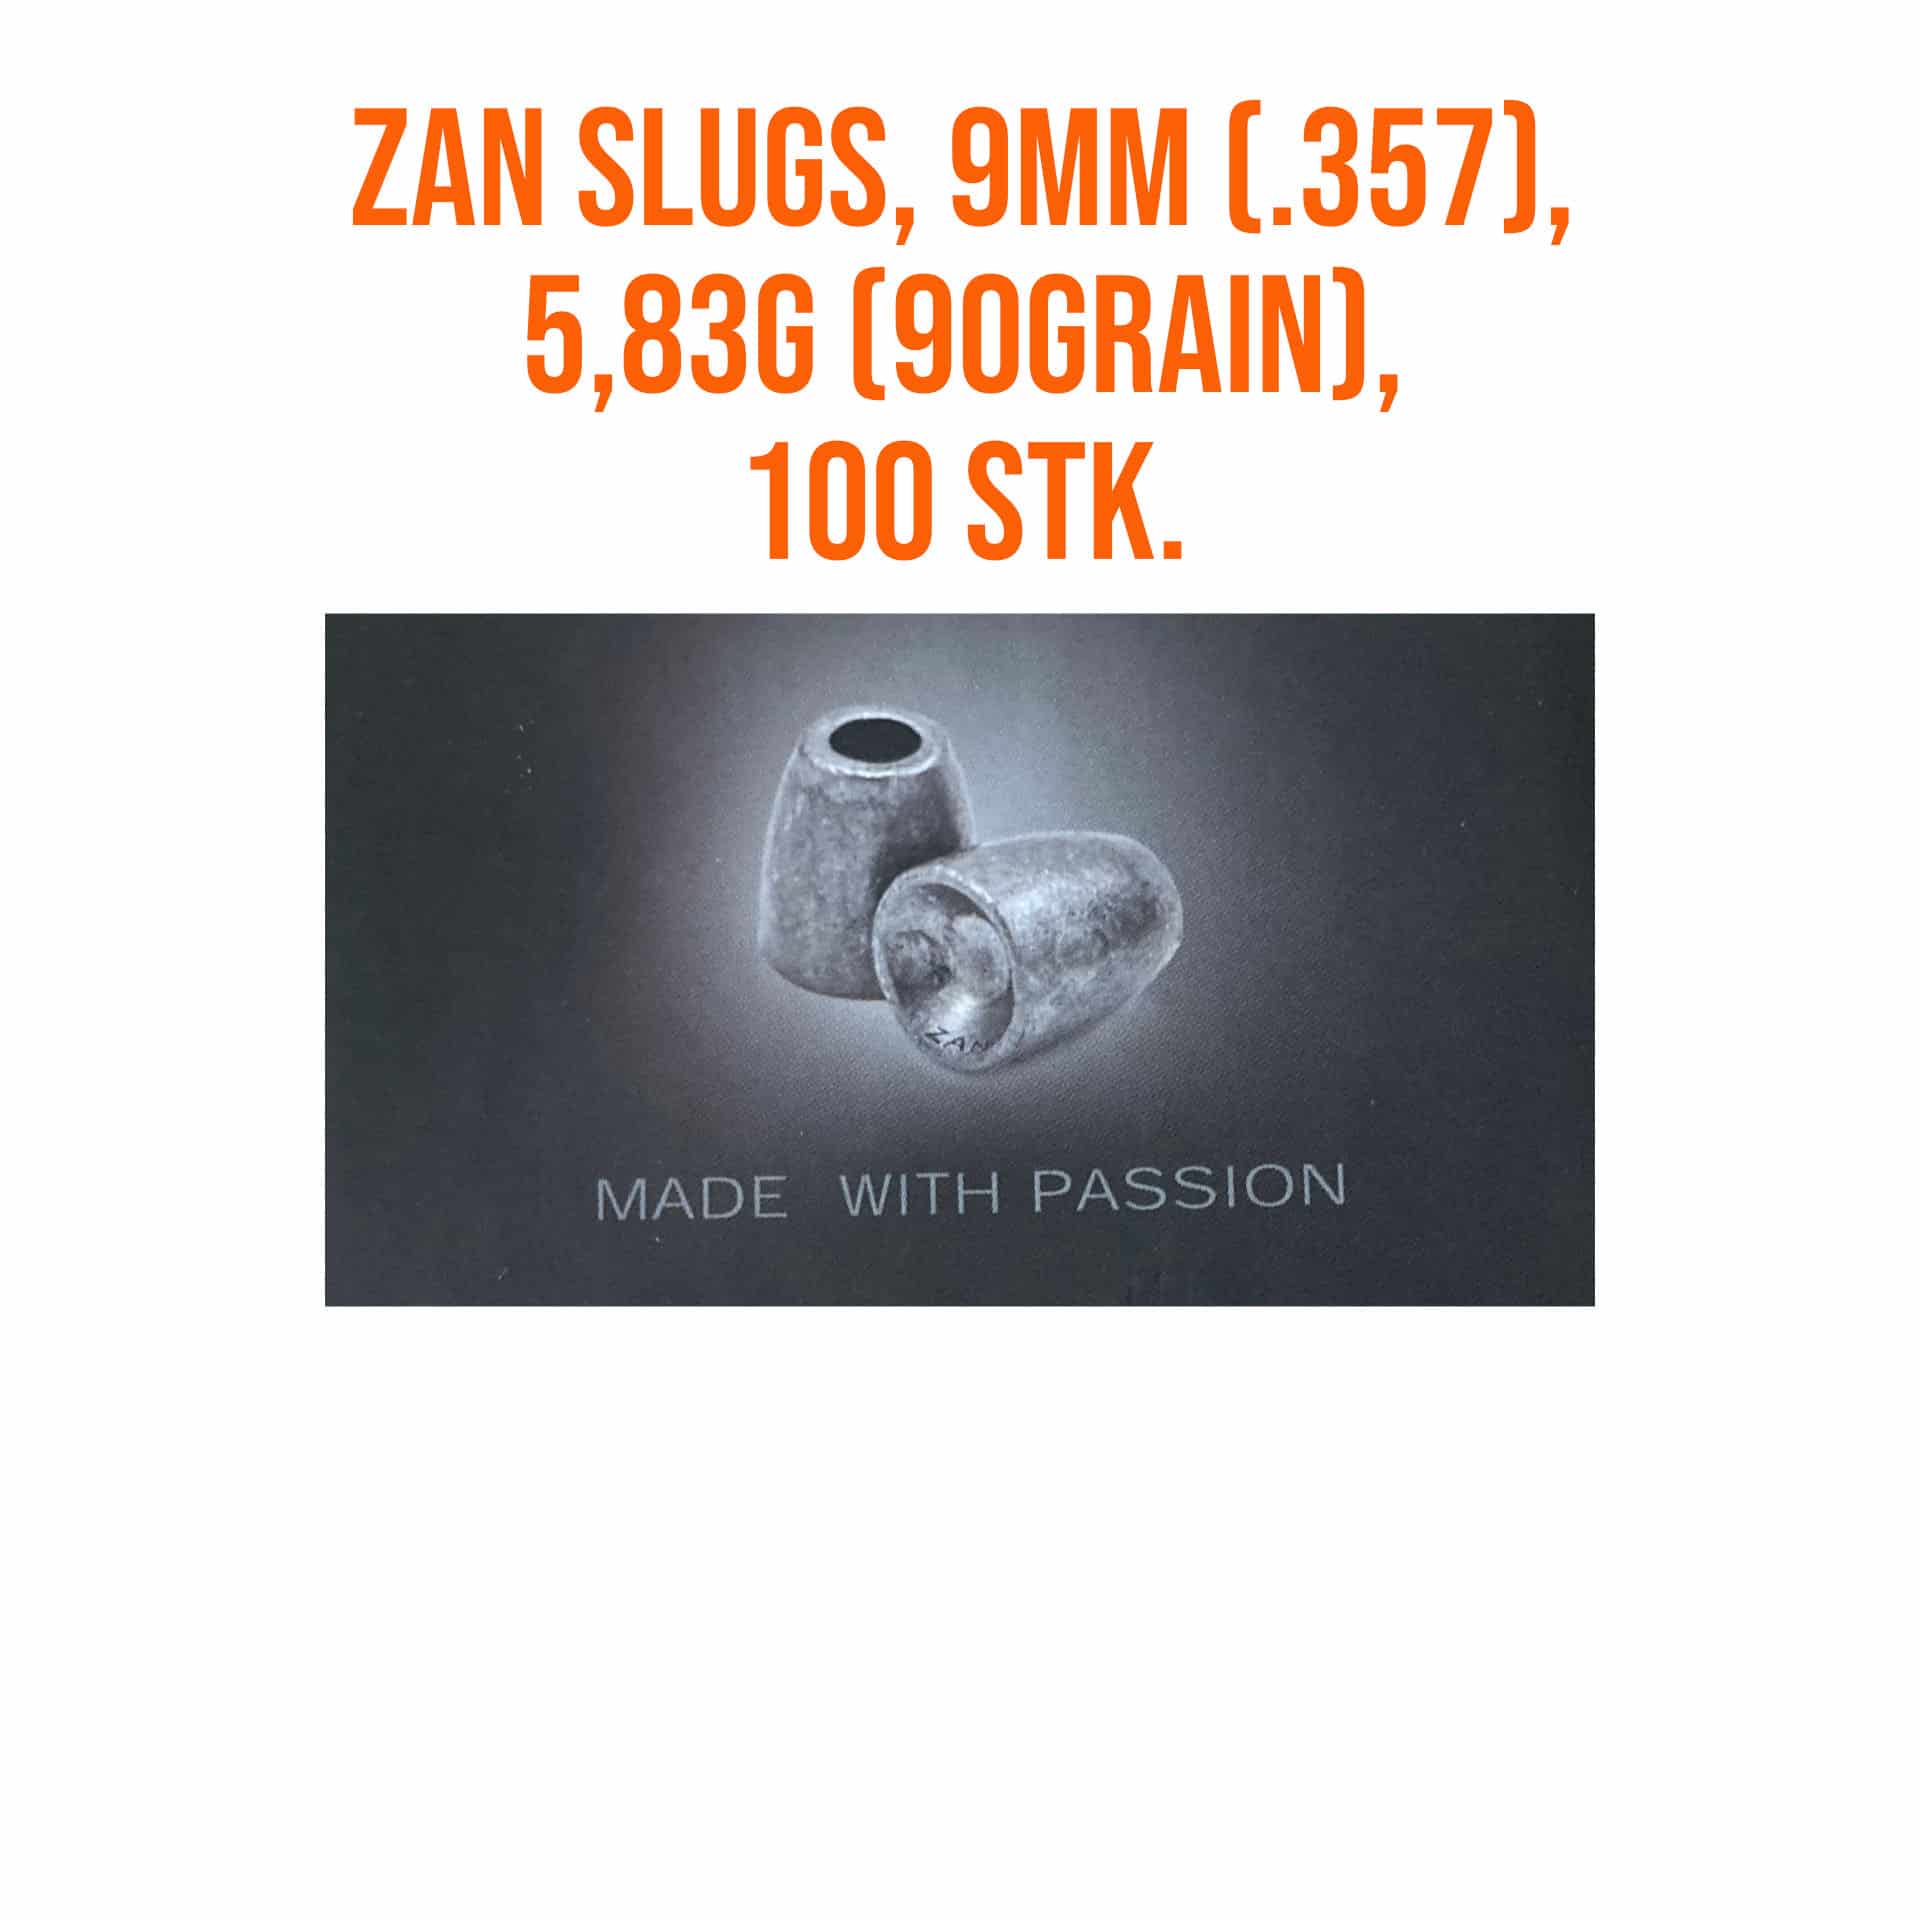 ZAN Slugs, 9mm (.357), 5,83g (90grain), 100 Stk.